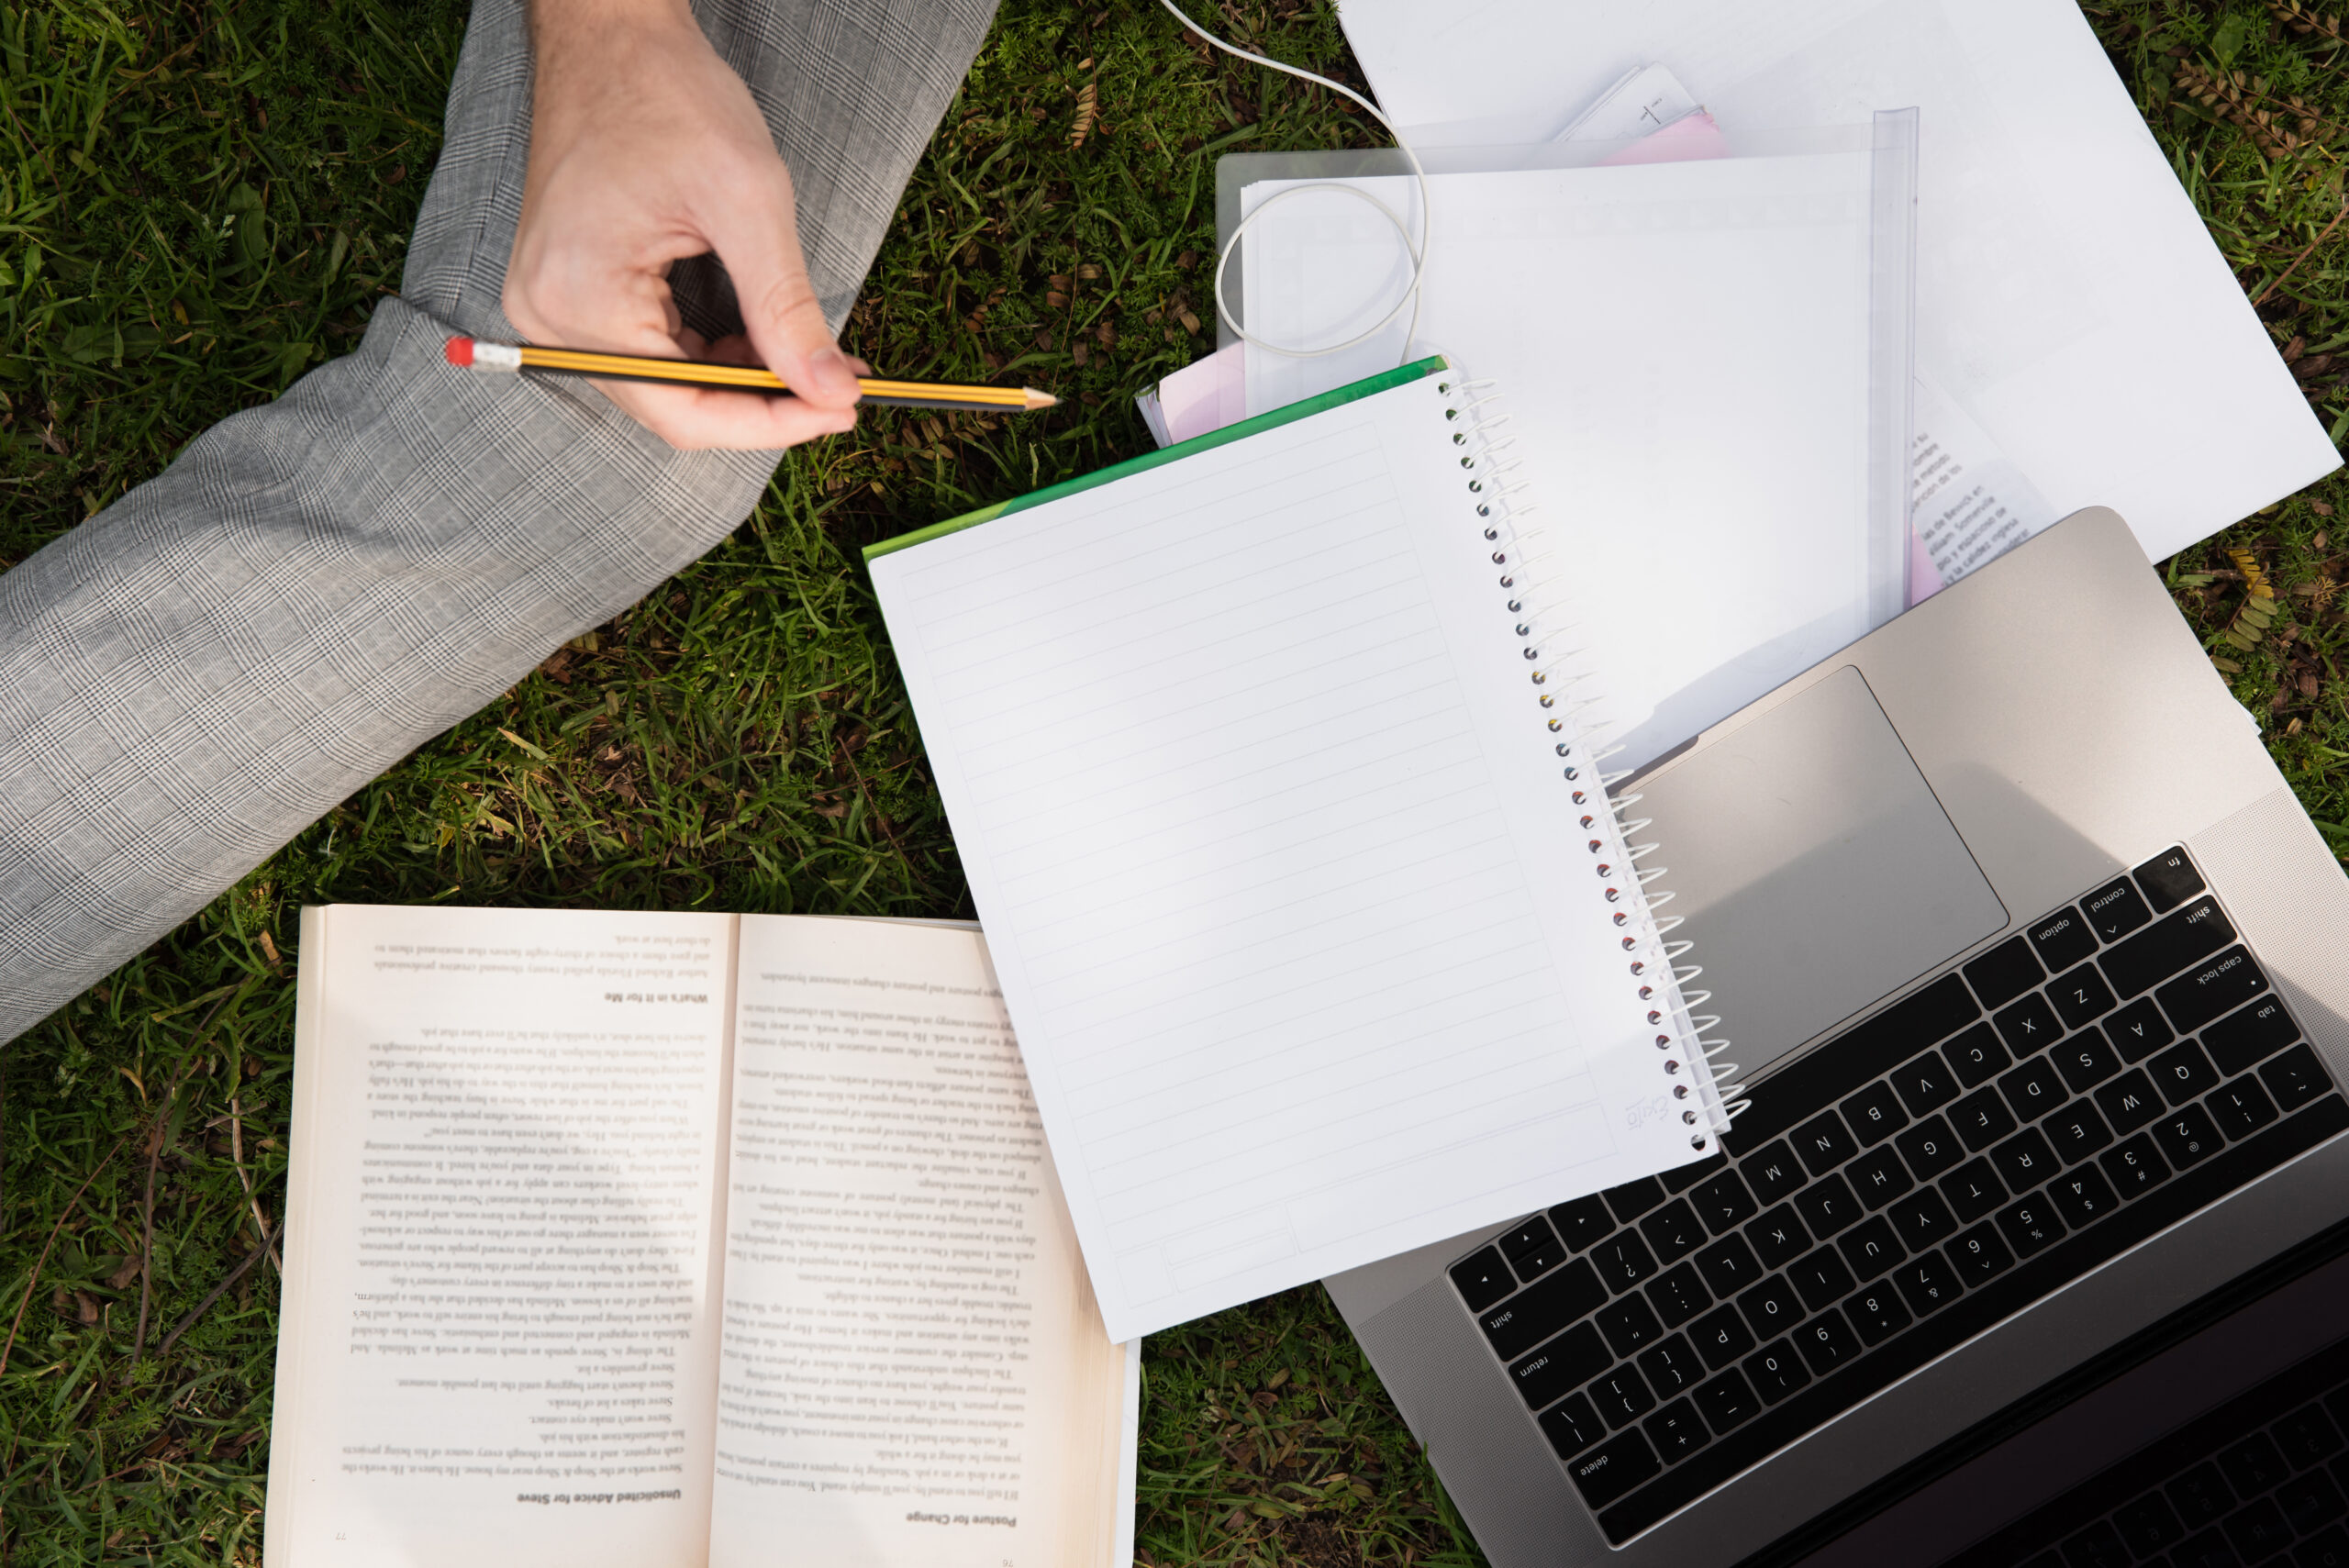 FantEssay Homework Writing Services Enhance Your Assignments